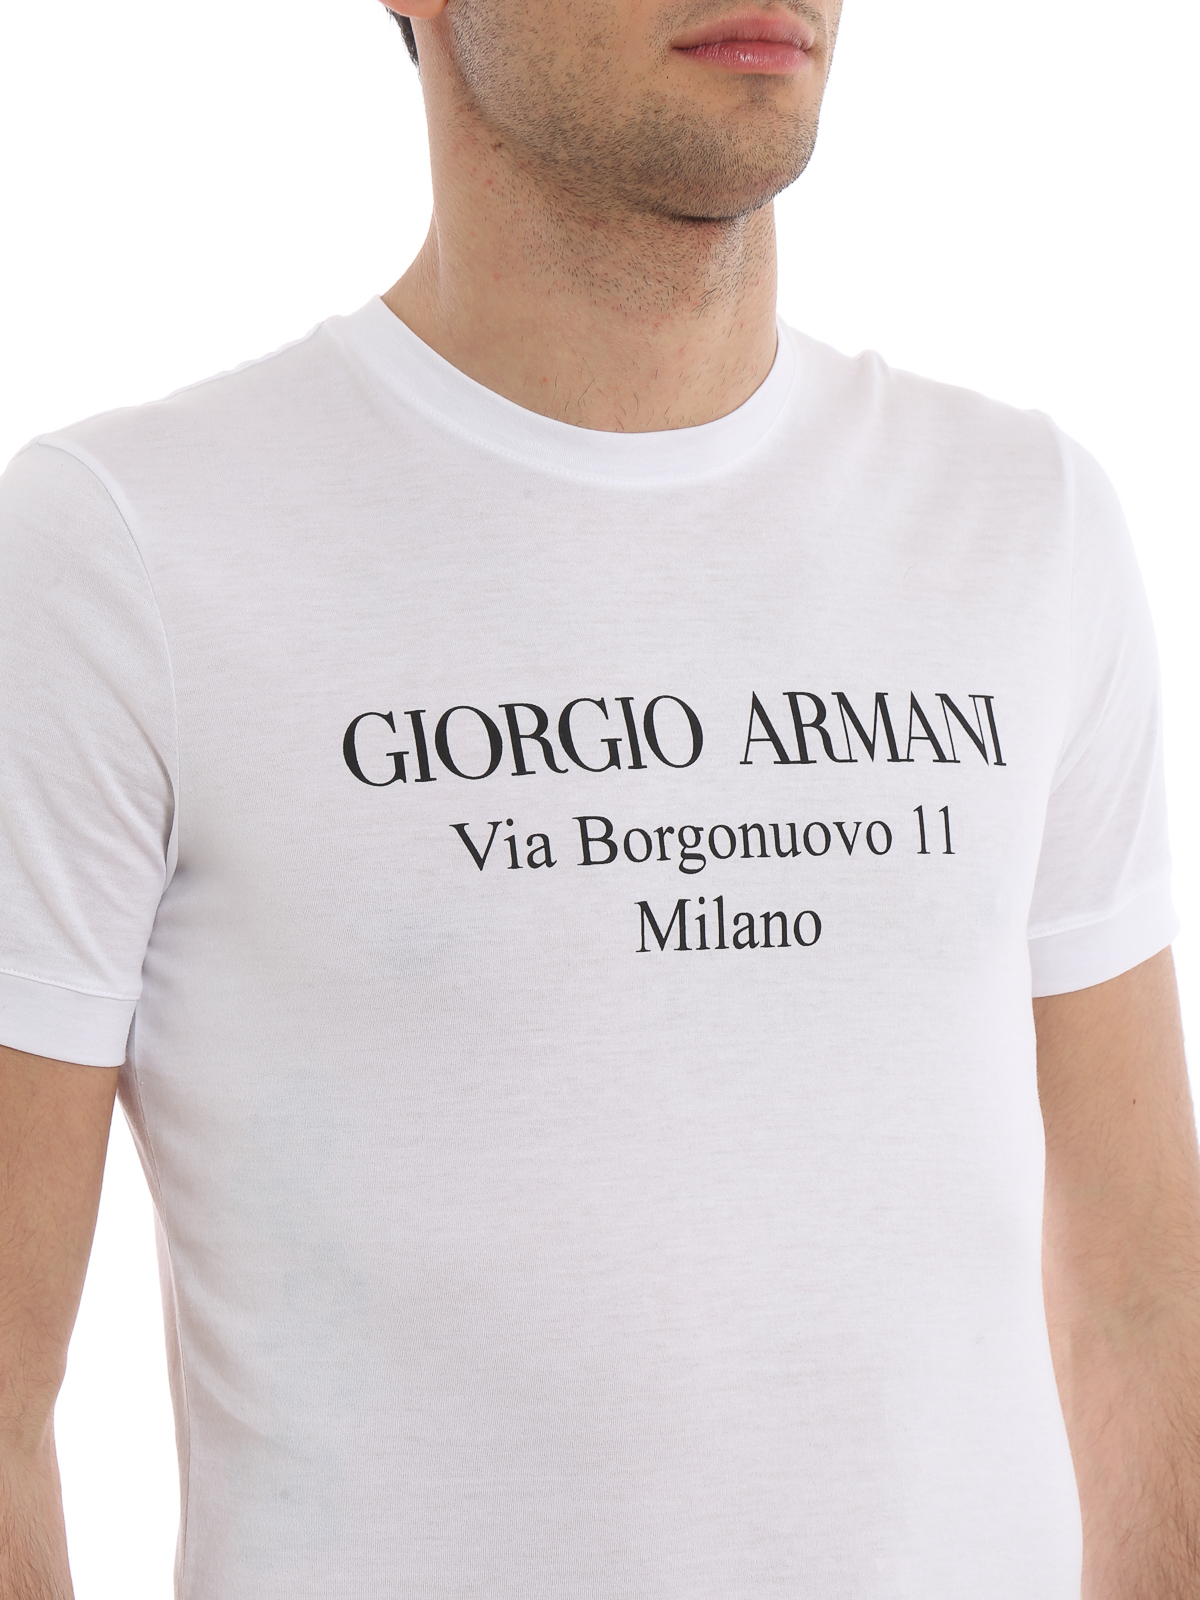 giorgio armani t shirts price